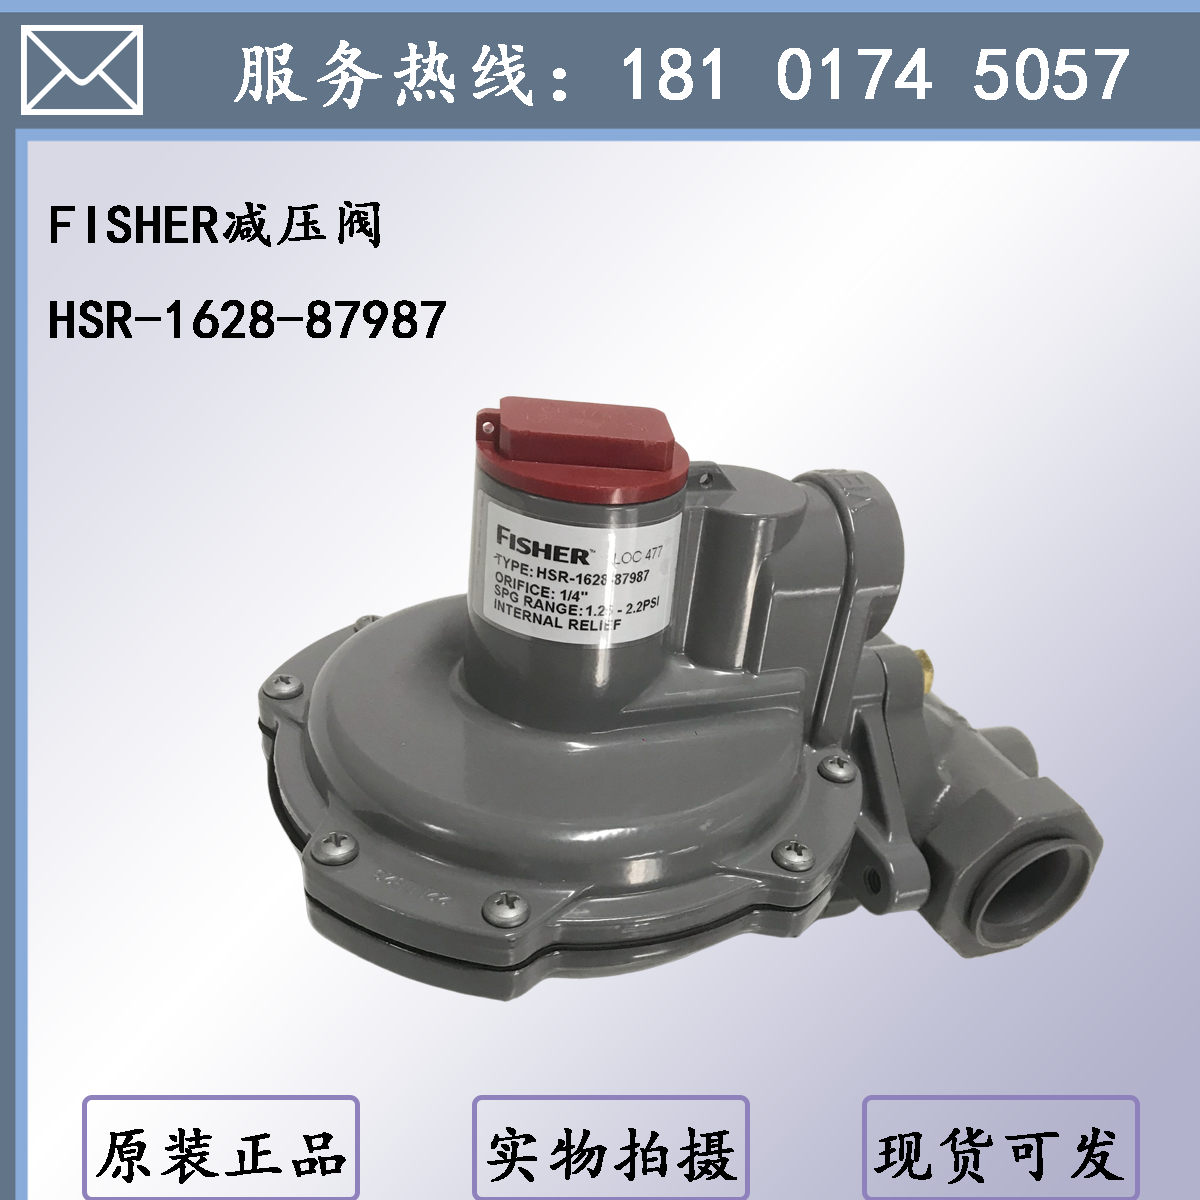 FISHER燃气减压阀HSR 1628-87987美国费谢尔二级调压器